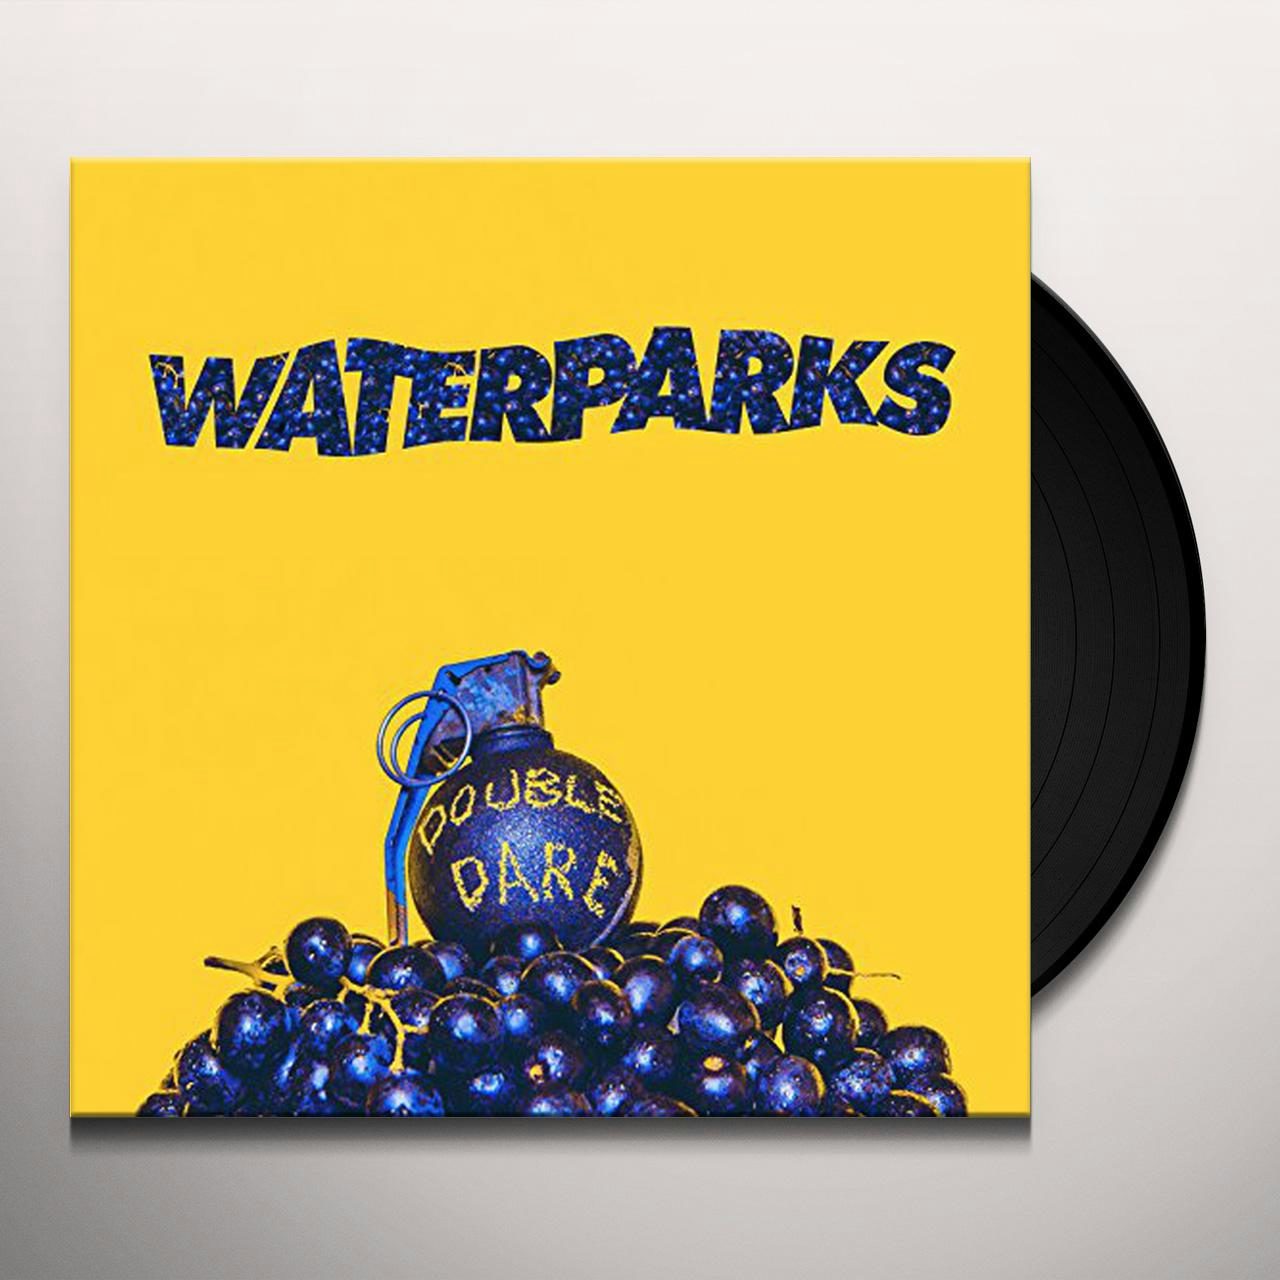 Waterparks Double Dare Vinyl Record